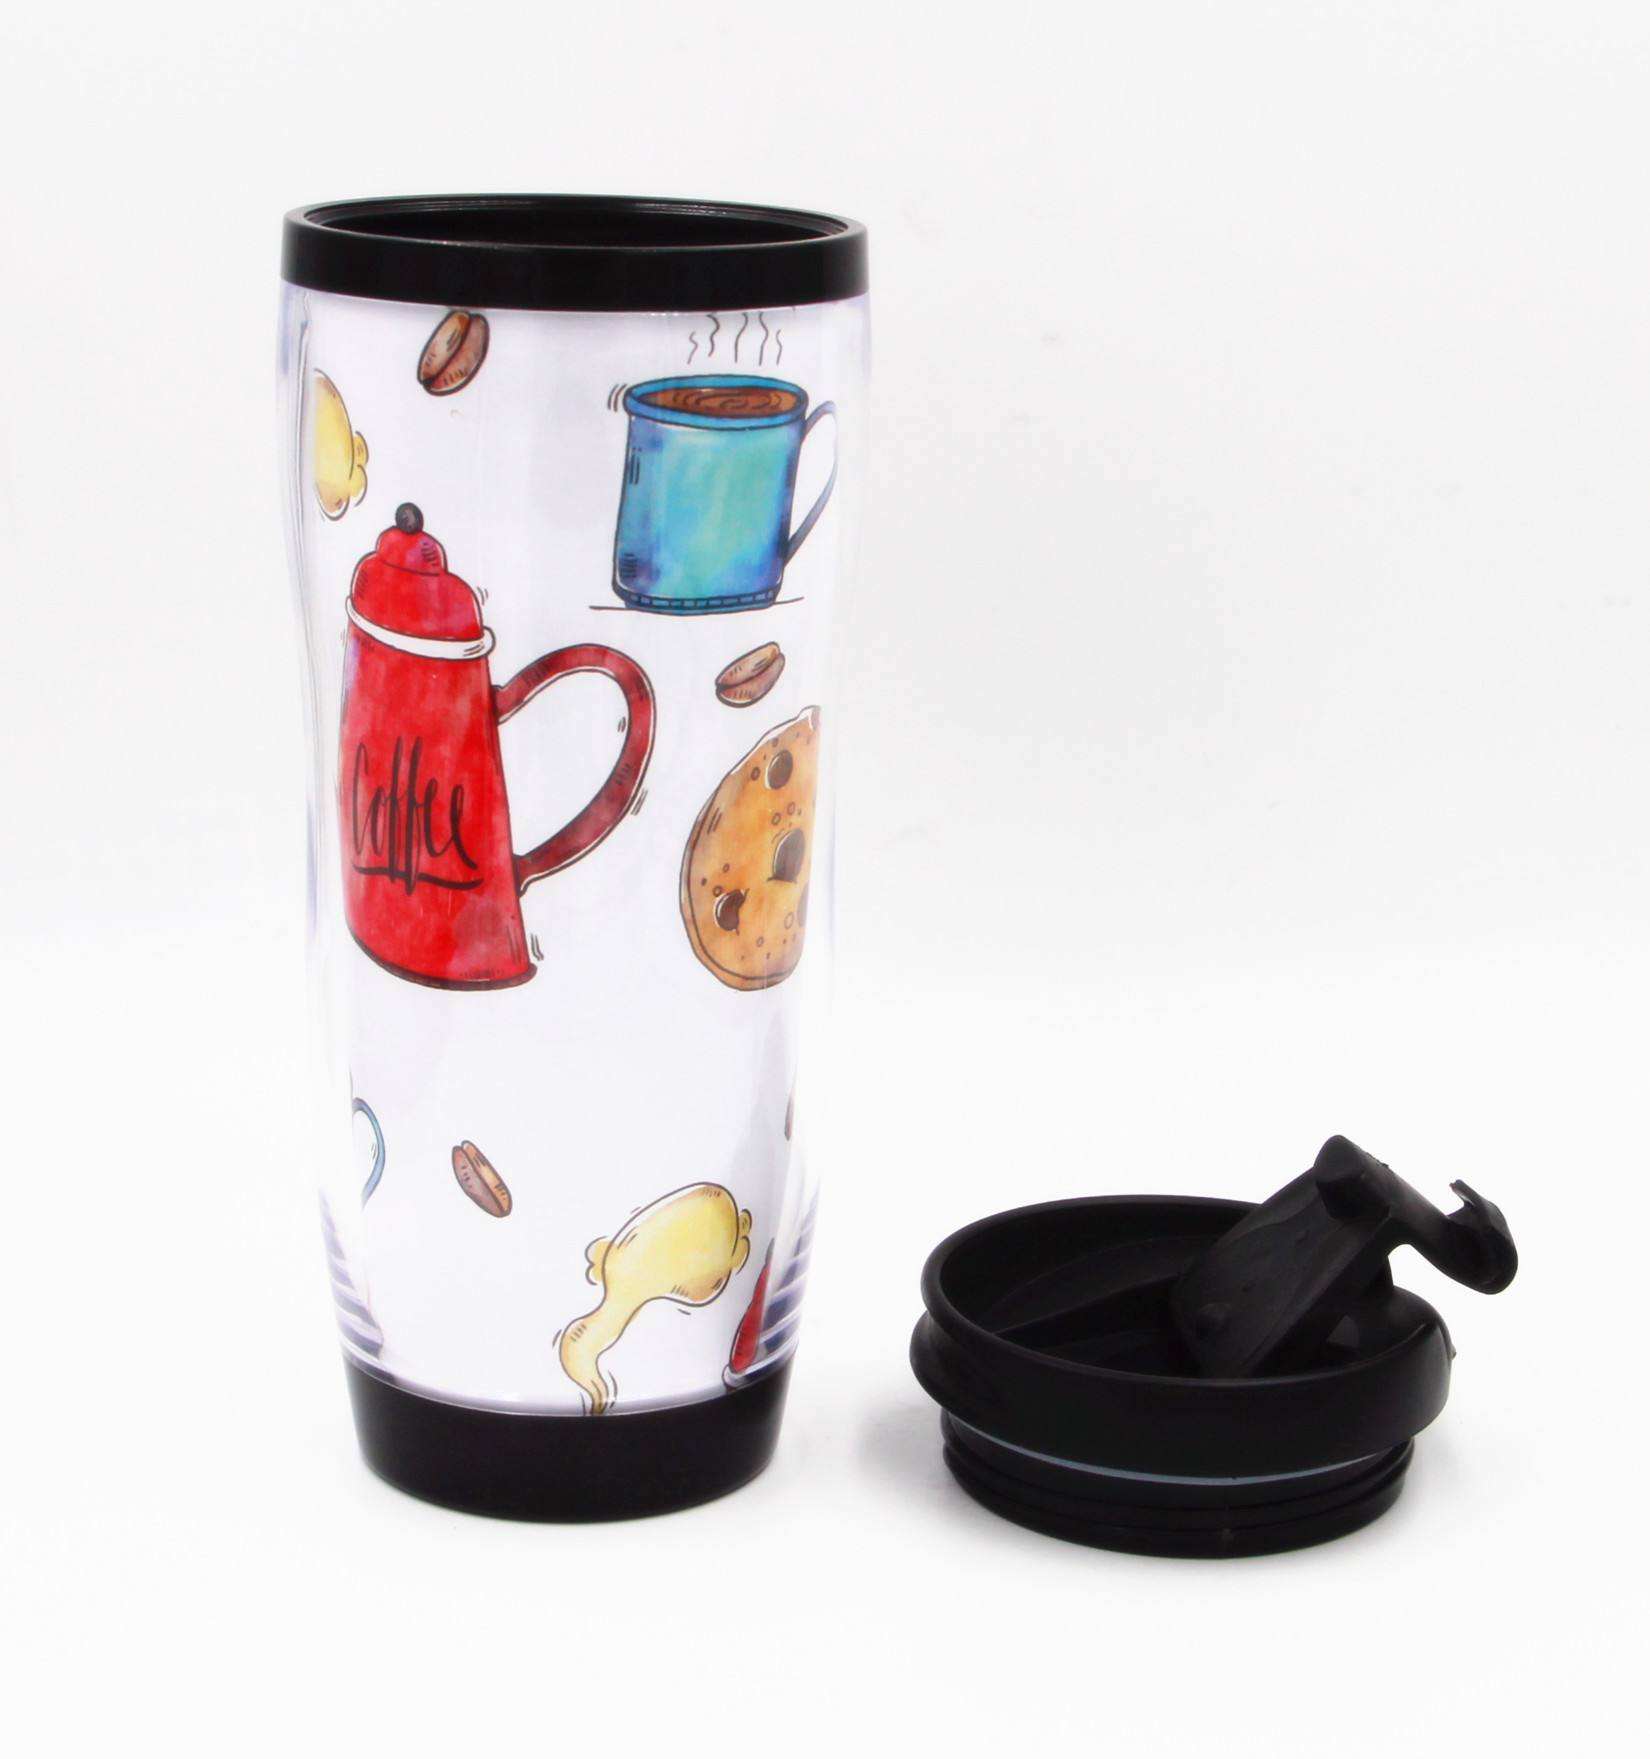 custom design make latest design plastic mug mold, plastic mug mould